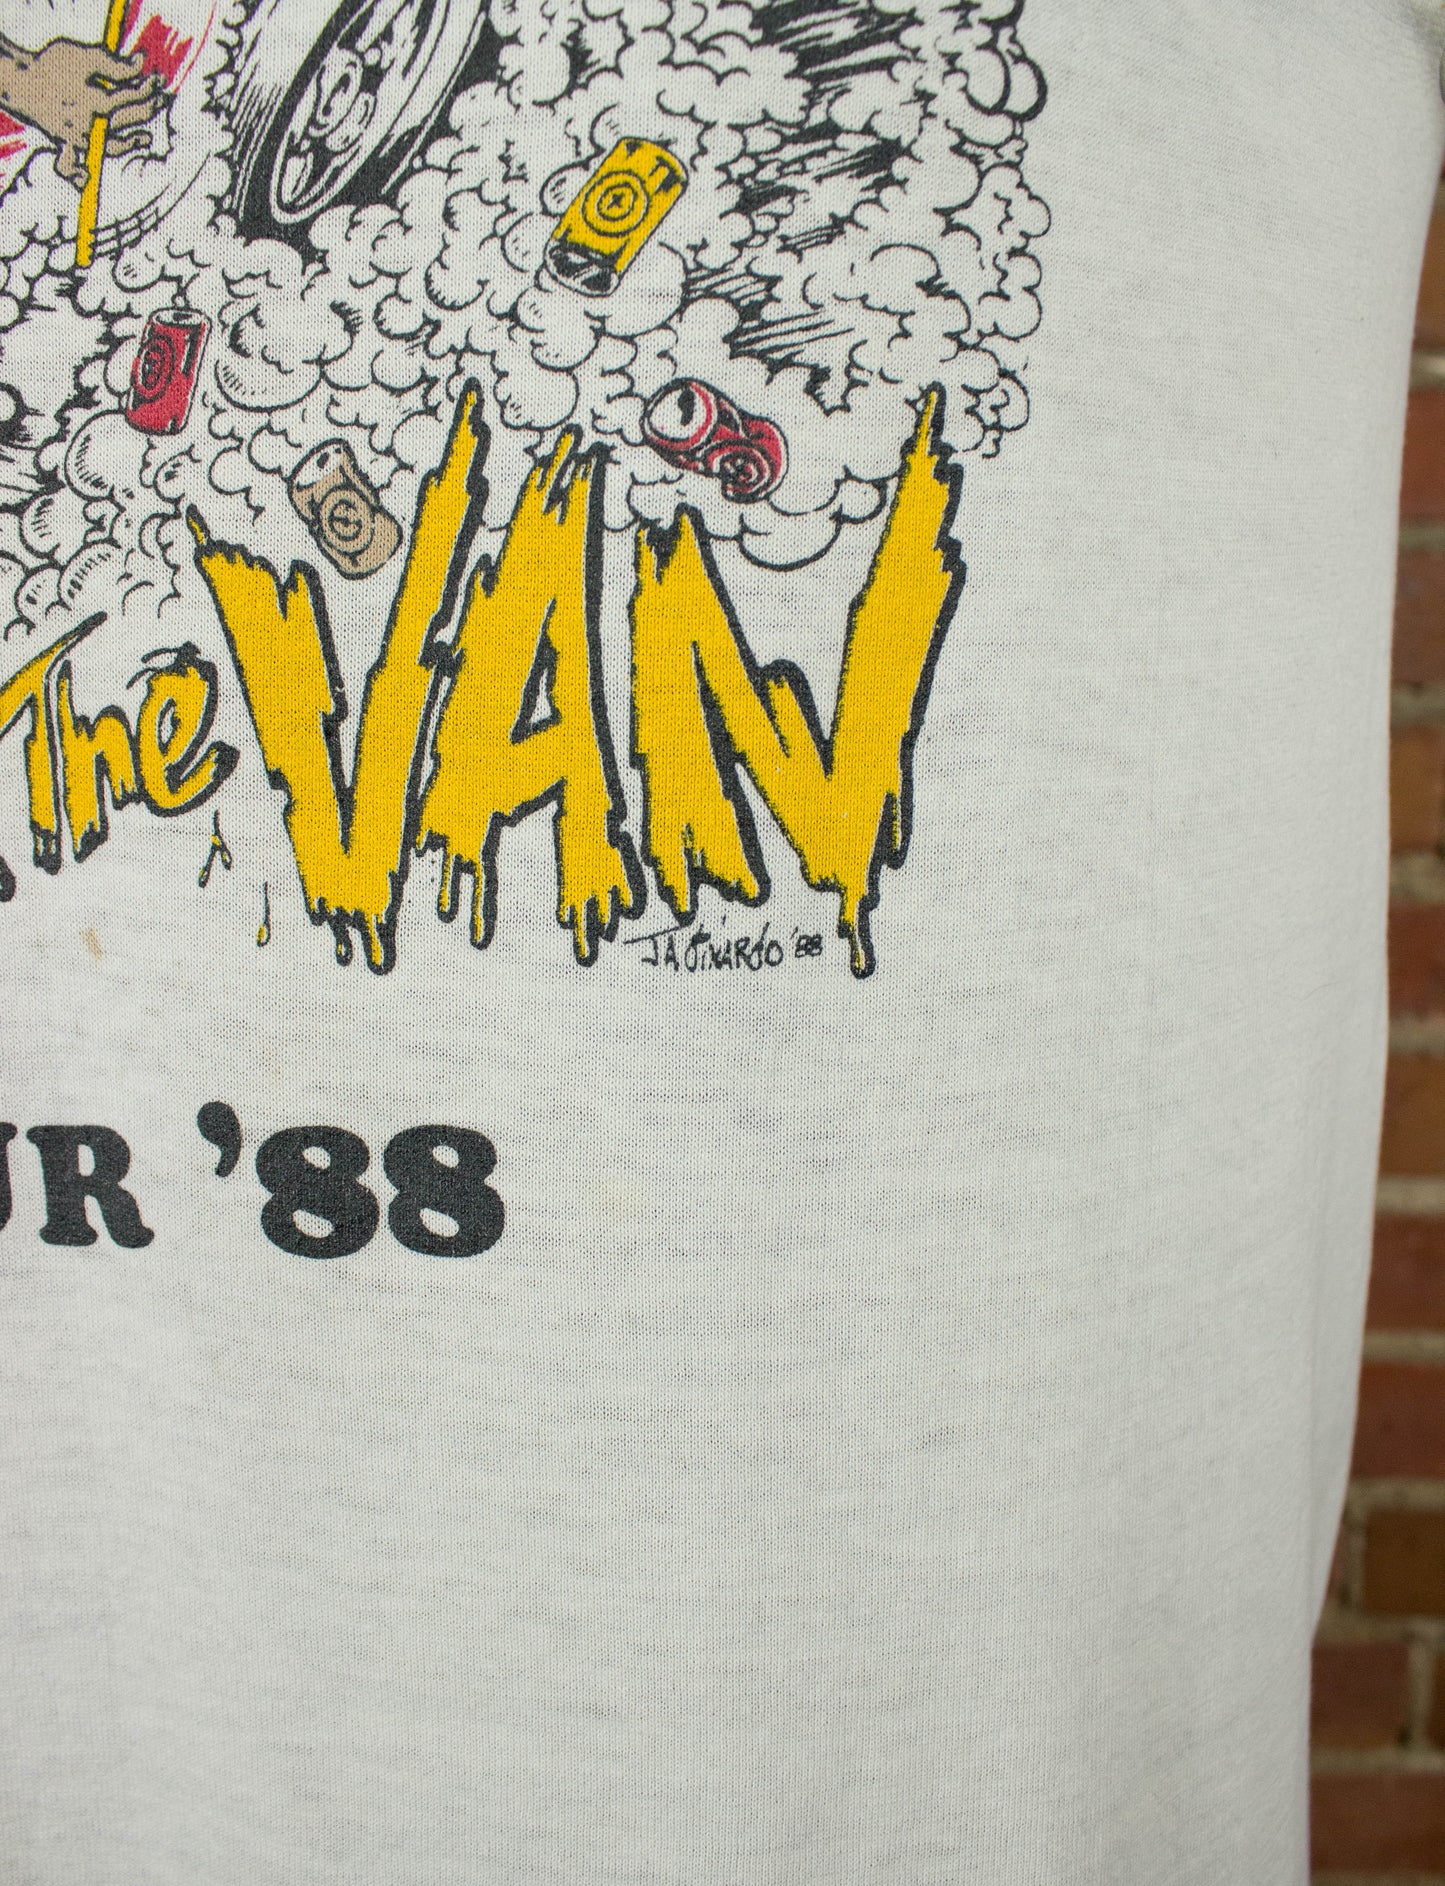 Vintage Goo Goo Dolls Concert T Shirt 1988 Cram The Van Tour White Medium